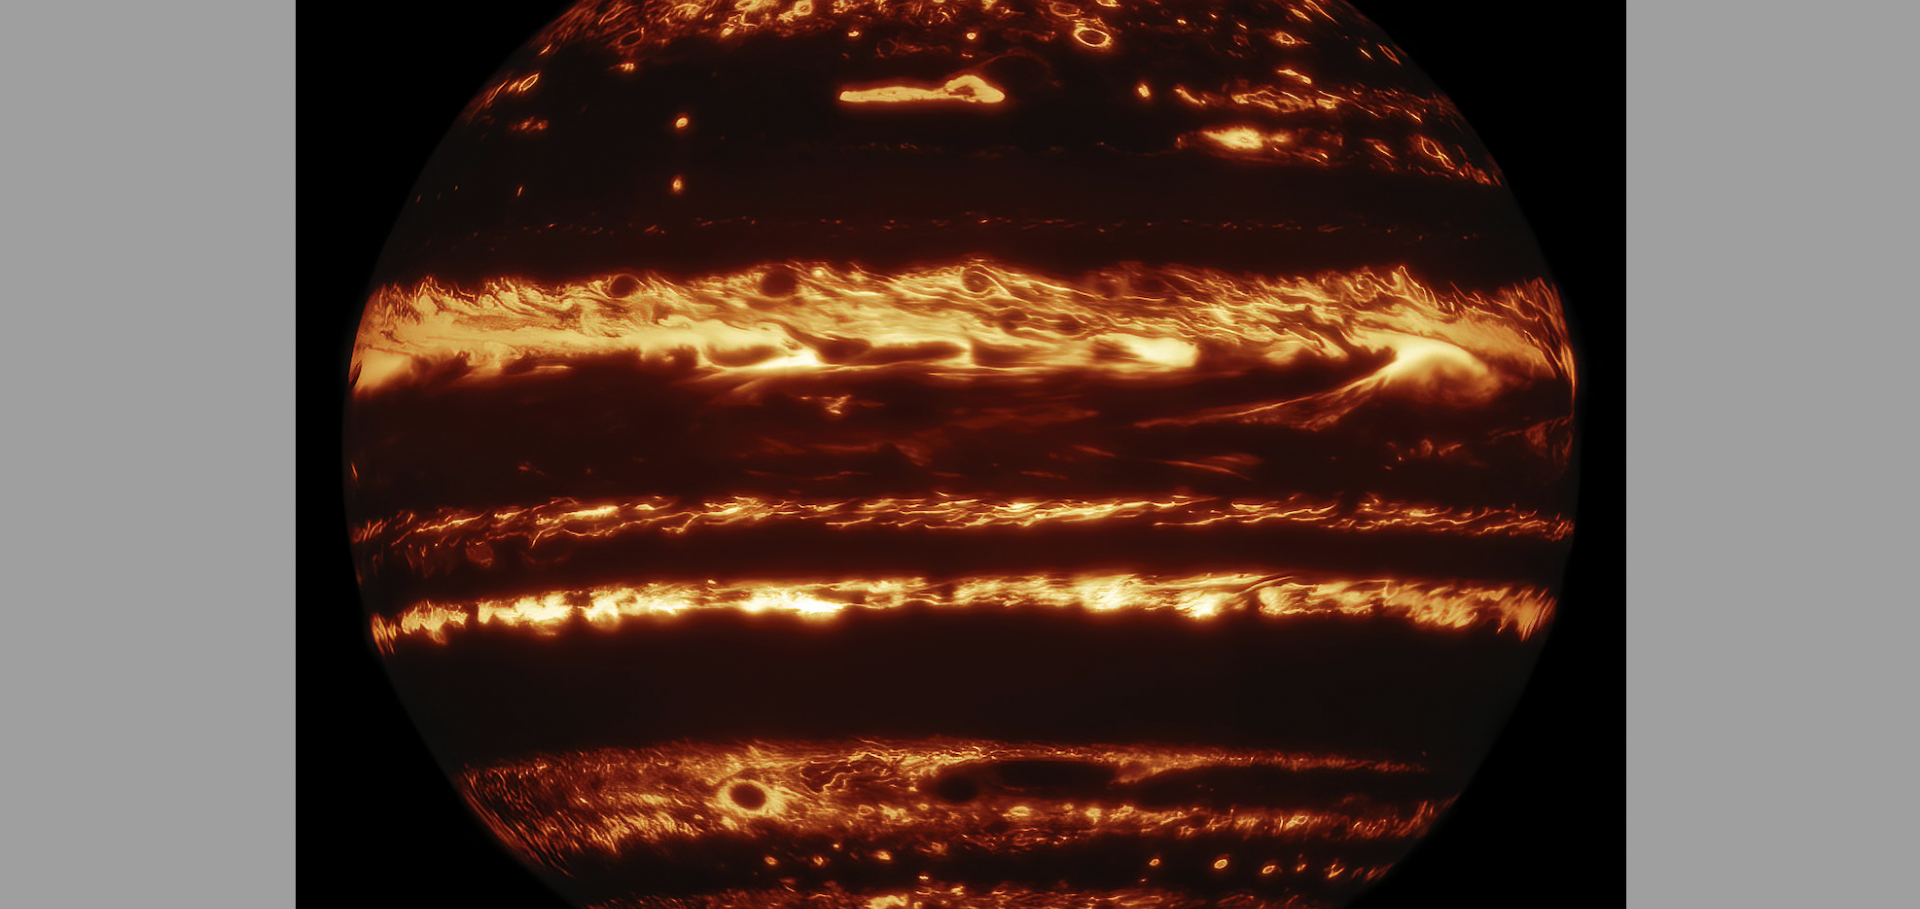 Jupiter's infrared image